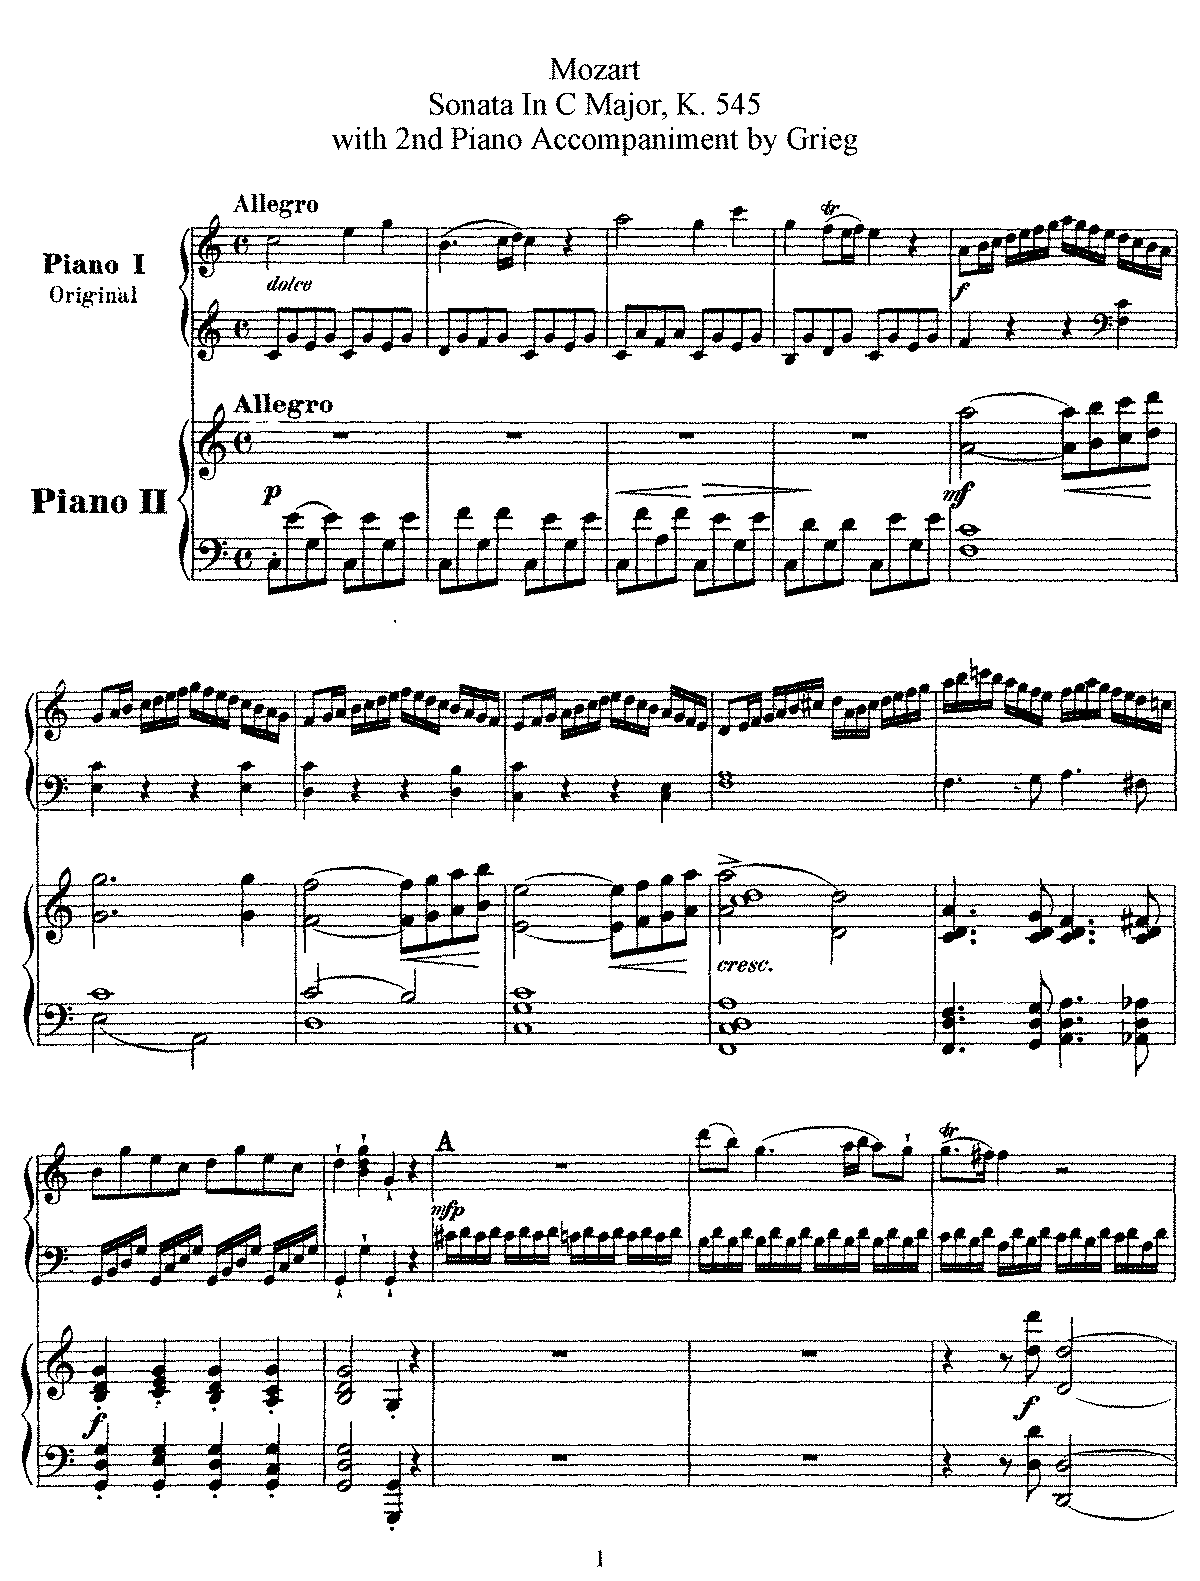 Piano Sonata No.16 in C major, K.545 (Mozart, Wolfgang Amadeus) - IMSLP